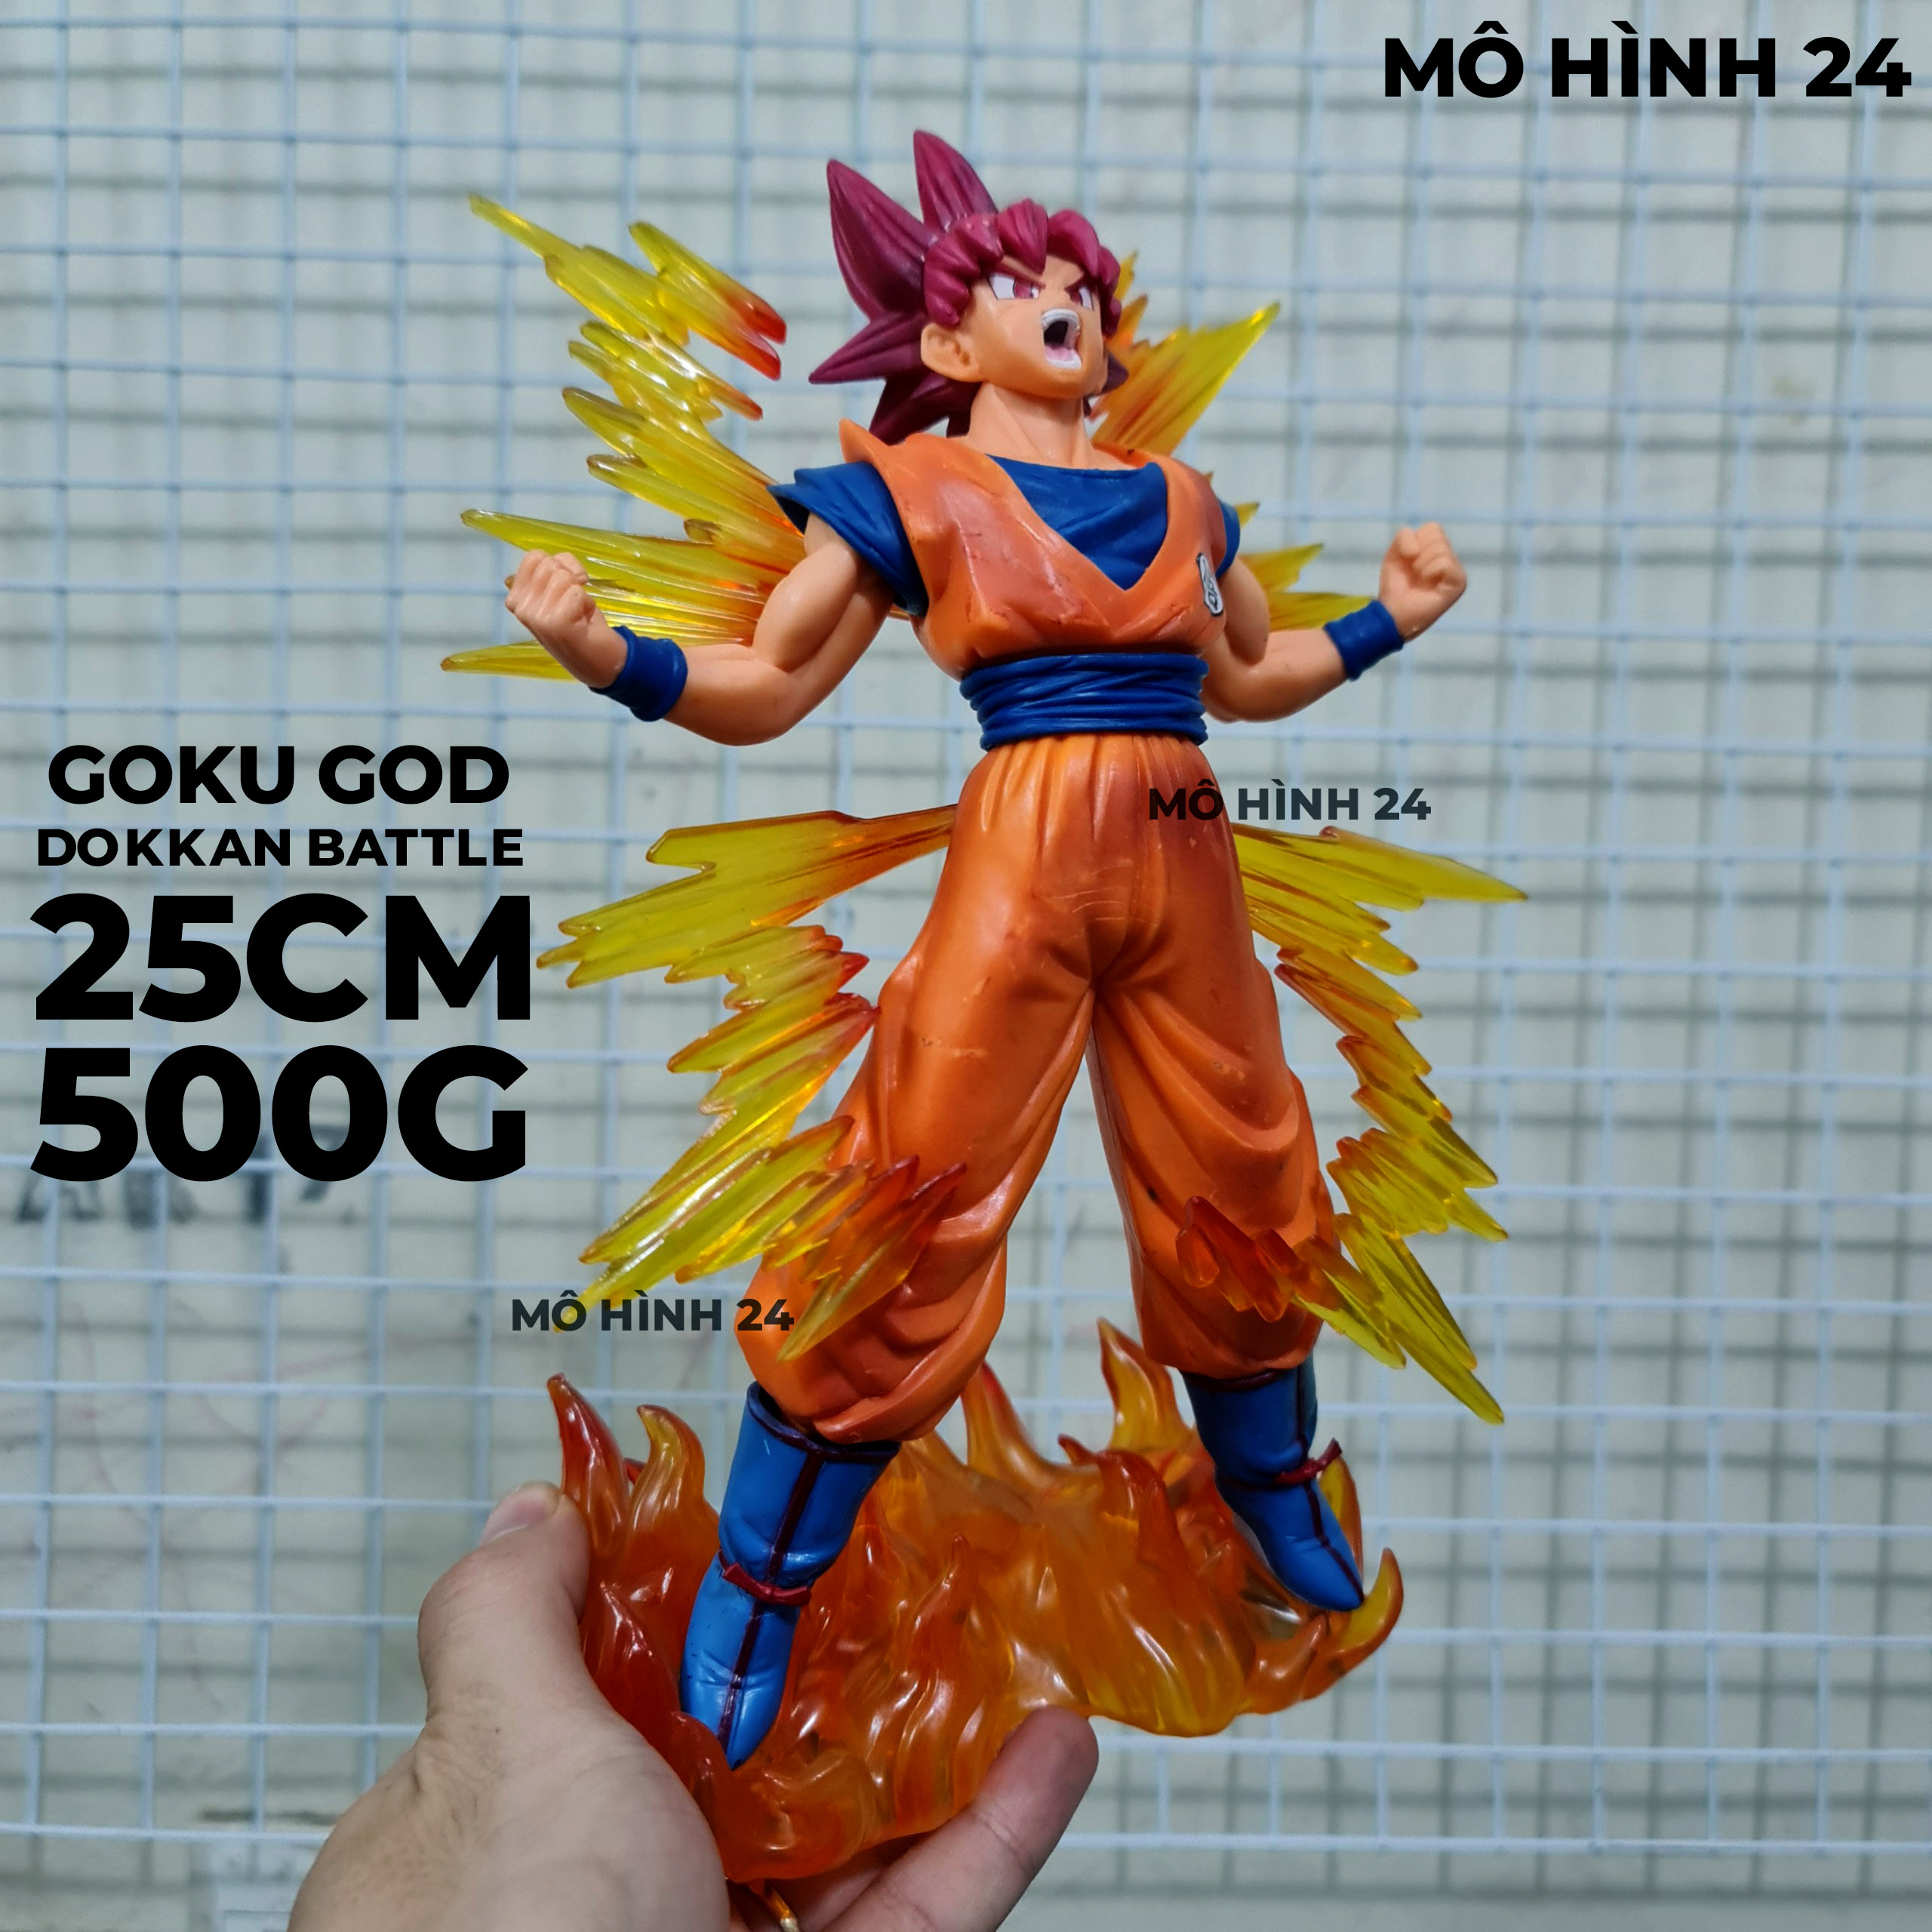 Unboxing mô hình Resin Goku Super Saiyan God 16  Wonder Art  Dragonball  Shop  YouTube